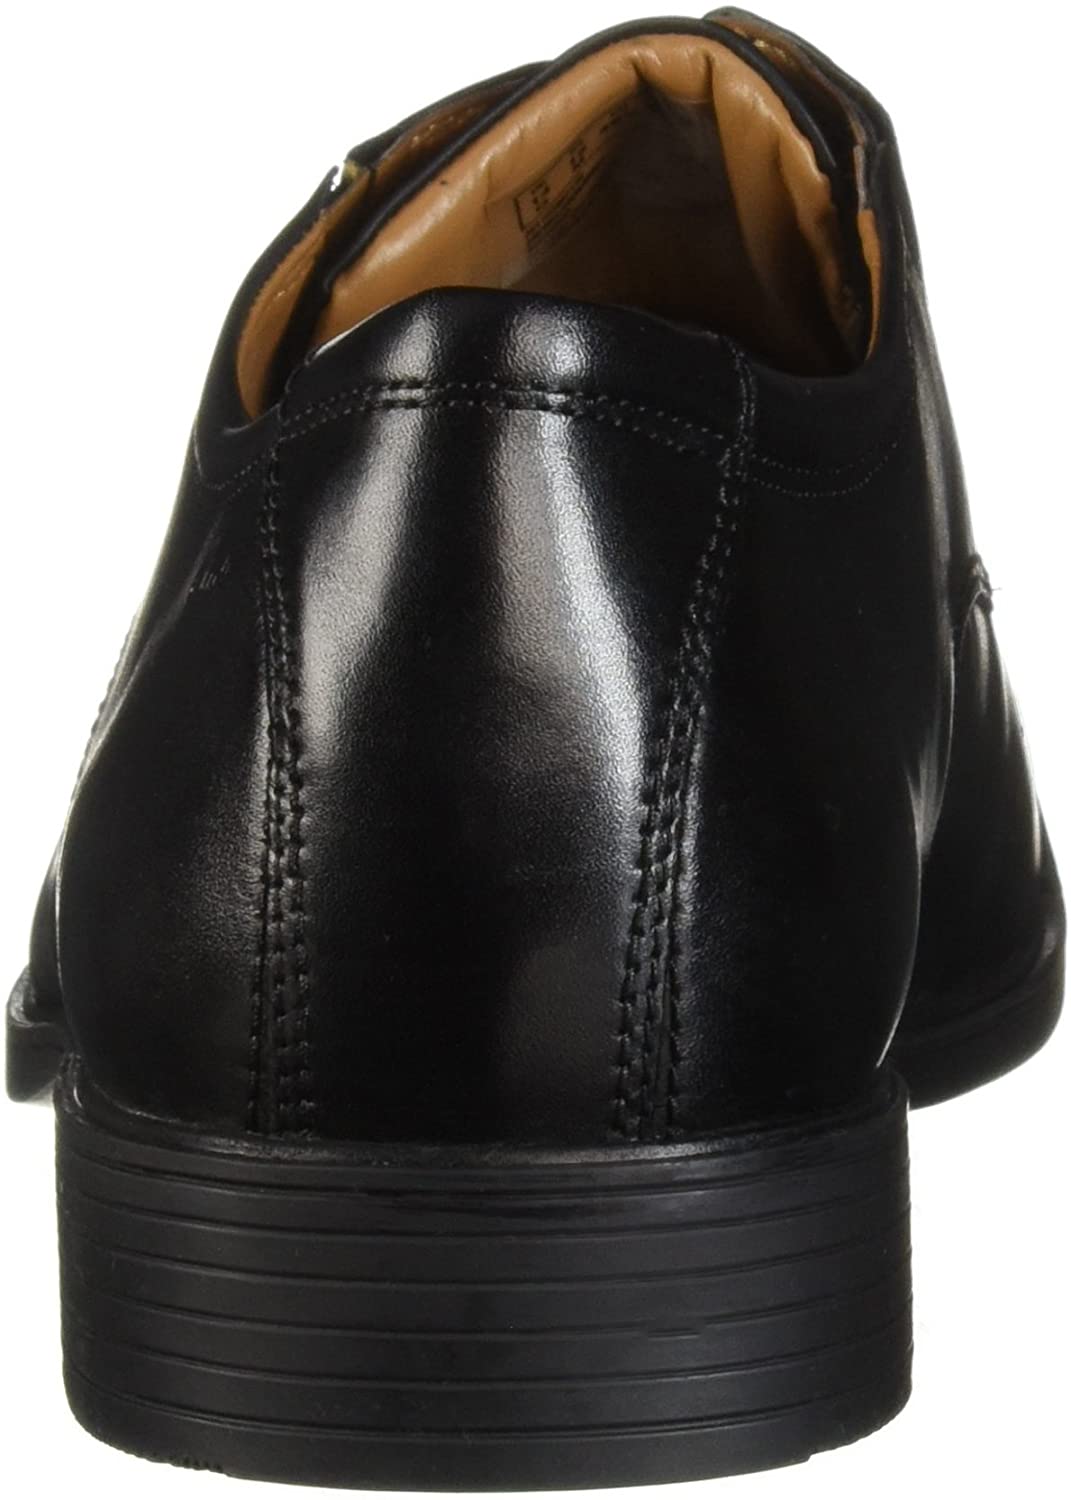 OLRIK Men's Tilden Cap Oxford Shoe